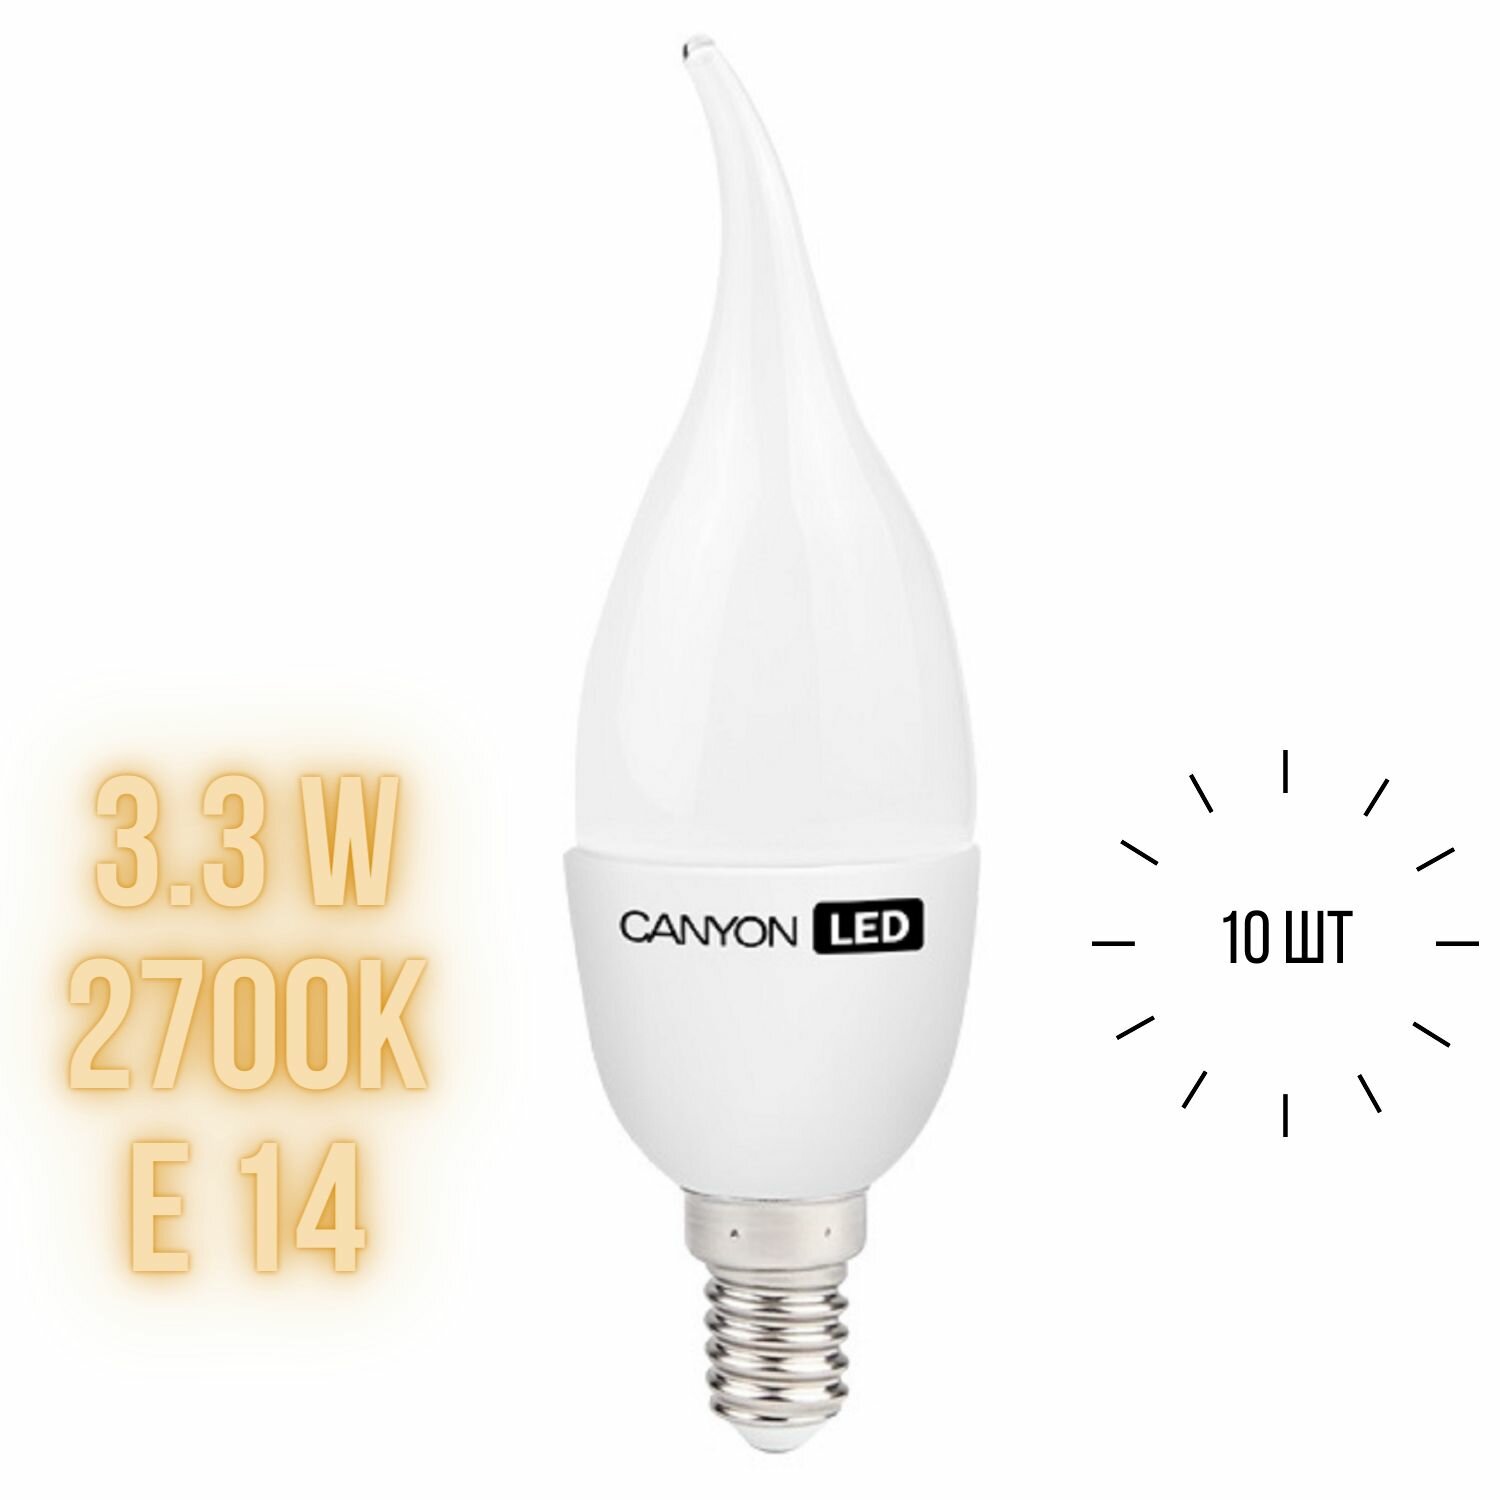 Лампа Canyon светодиодная BXS38-3.3W/2700/E14 BXE14FR33W230VW набор 10 шт.